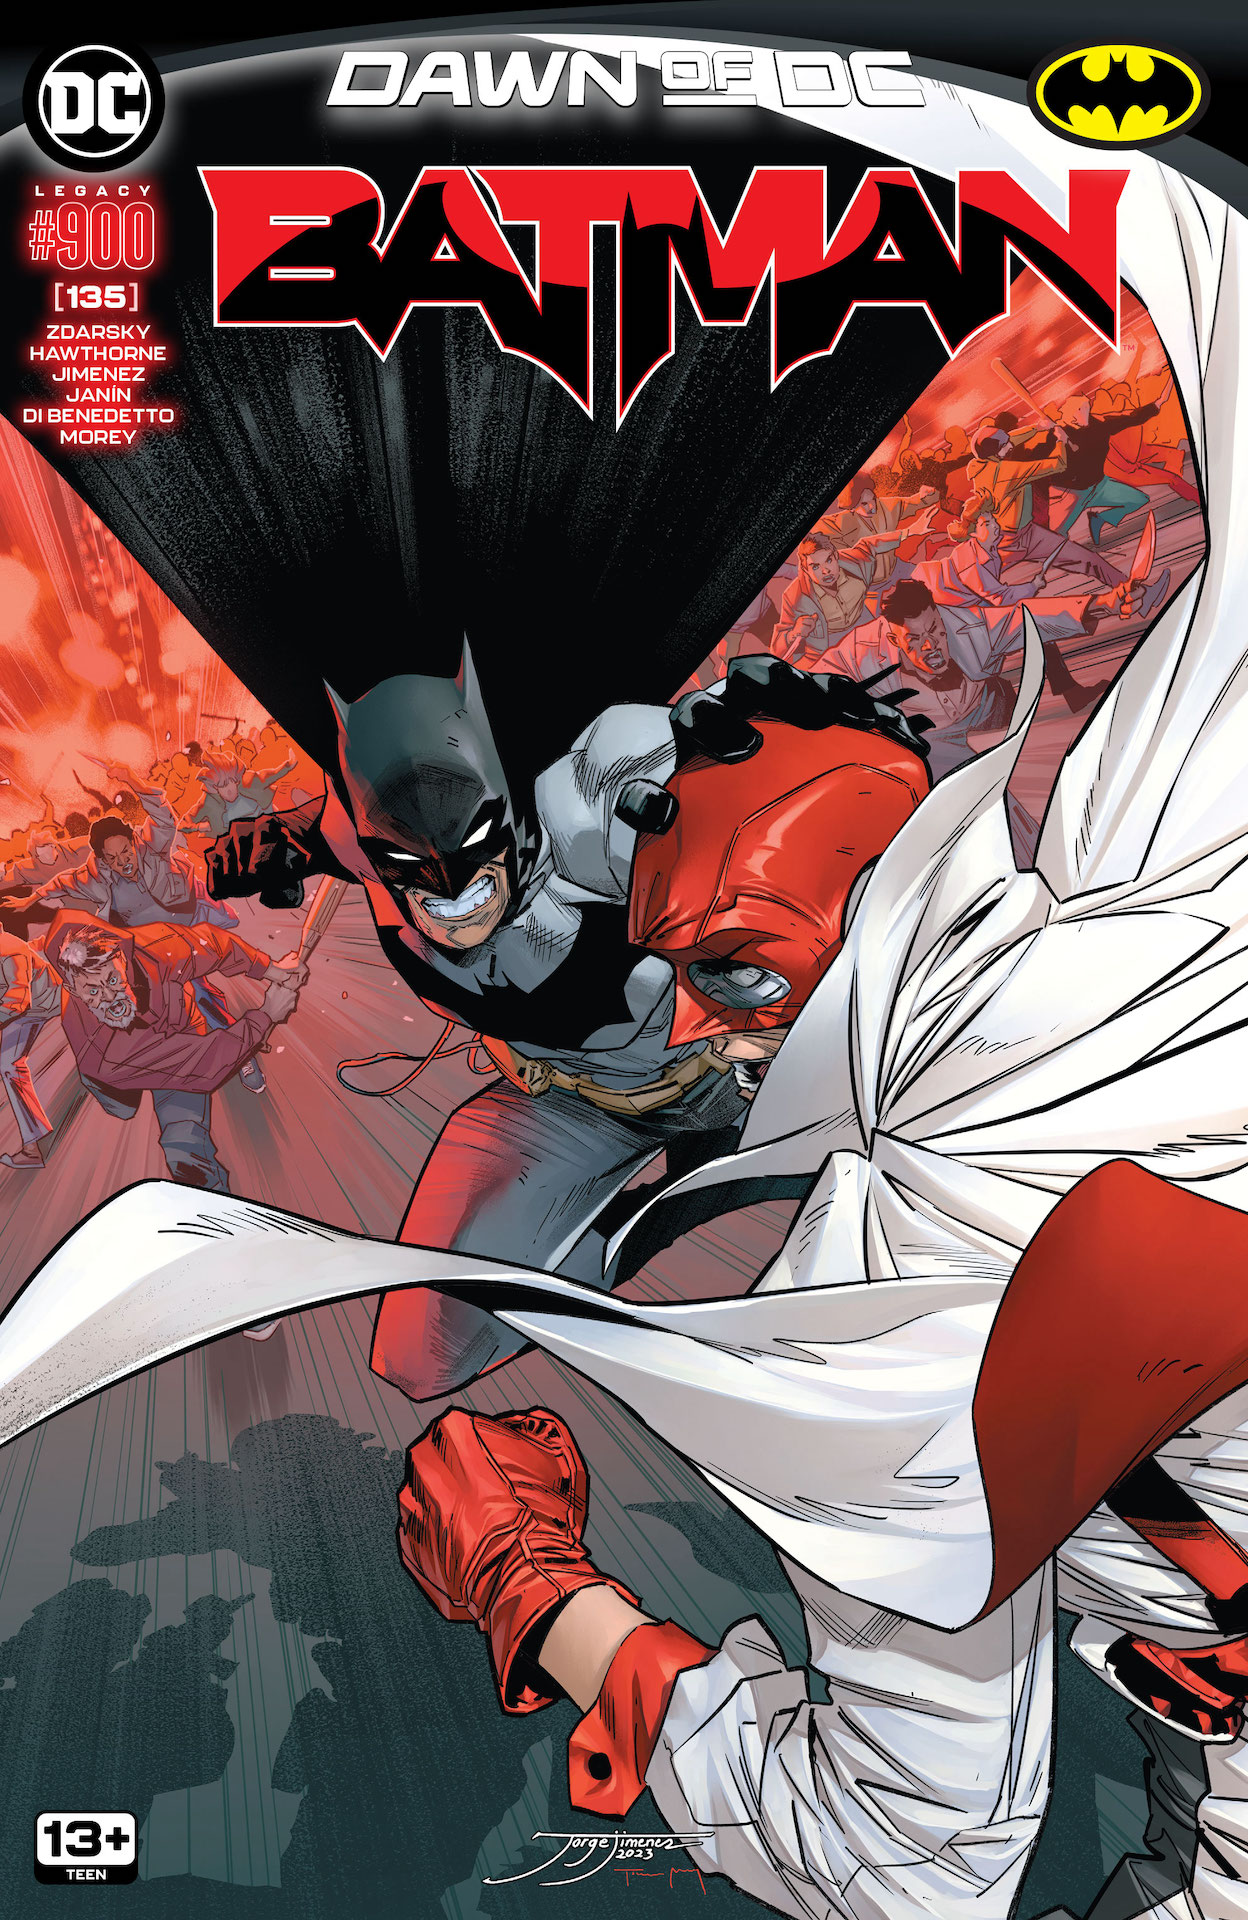 DC Preview: Batman #135 (LGY #900)